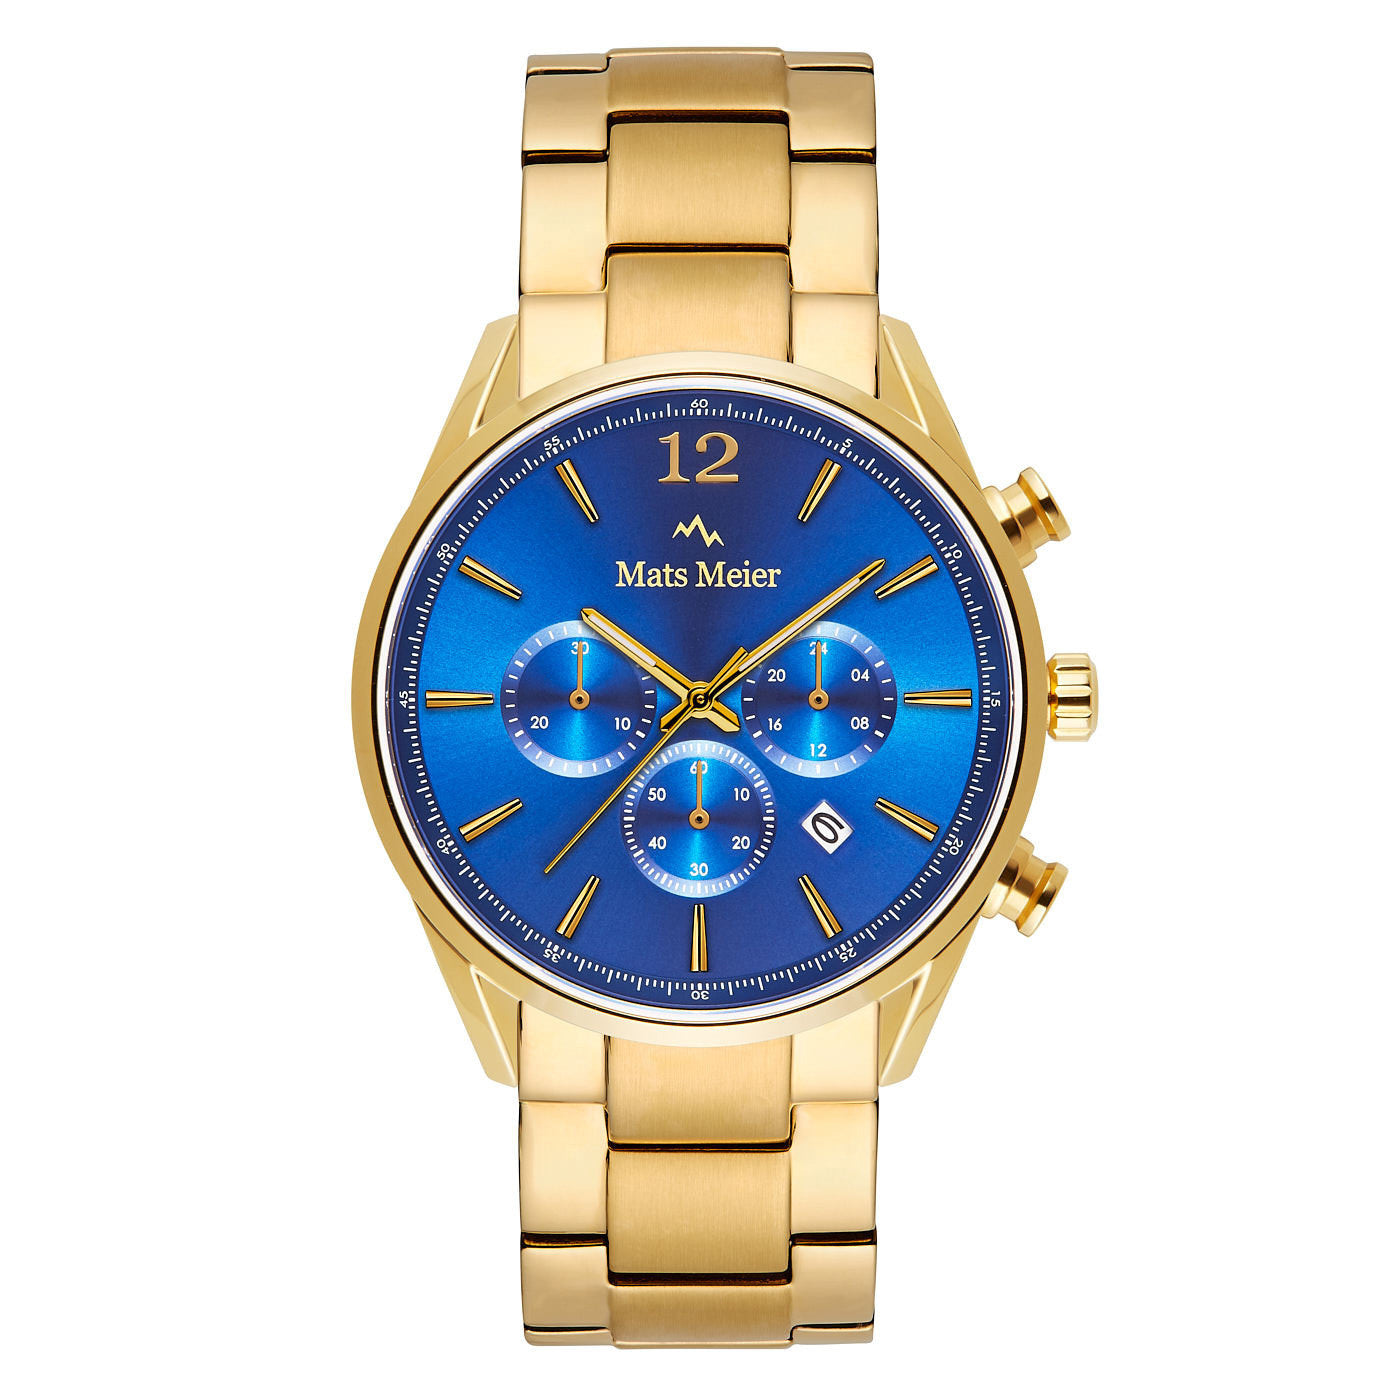 Grand Cornier chronograaf herenhorloge goudkleurig en blauw